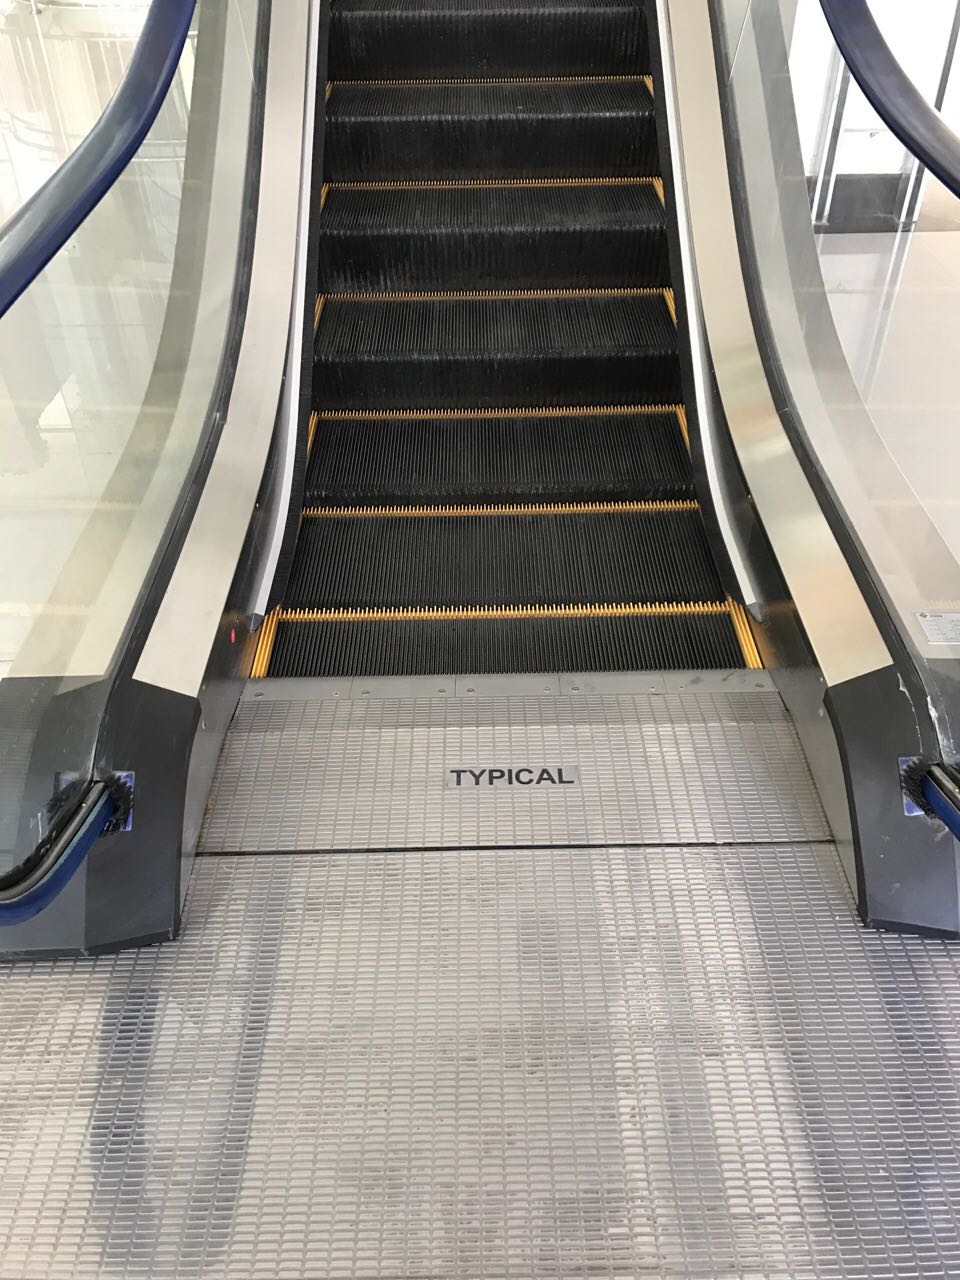 Typical Escalator